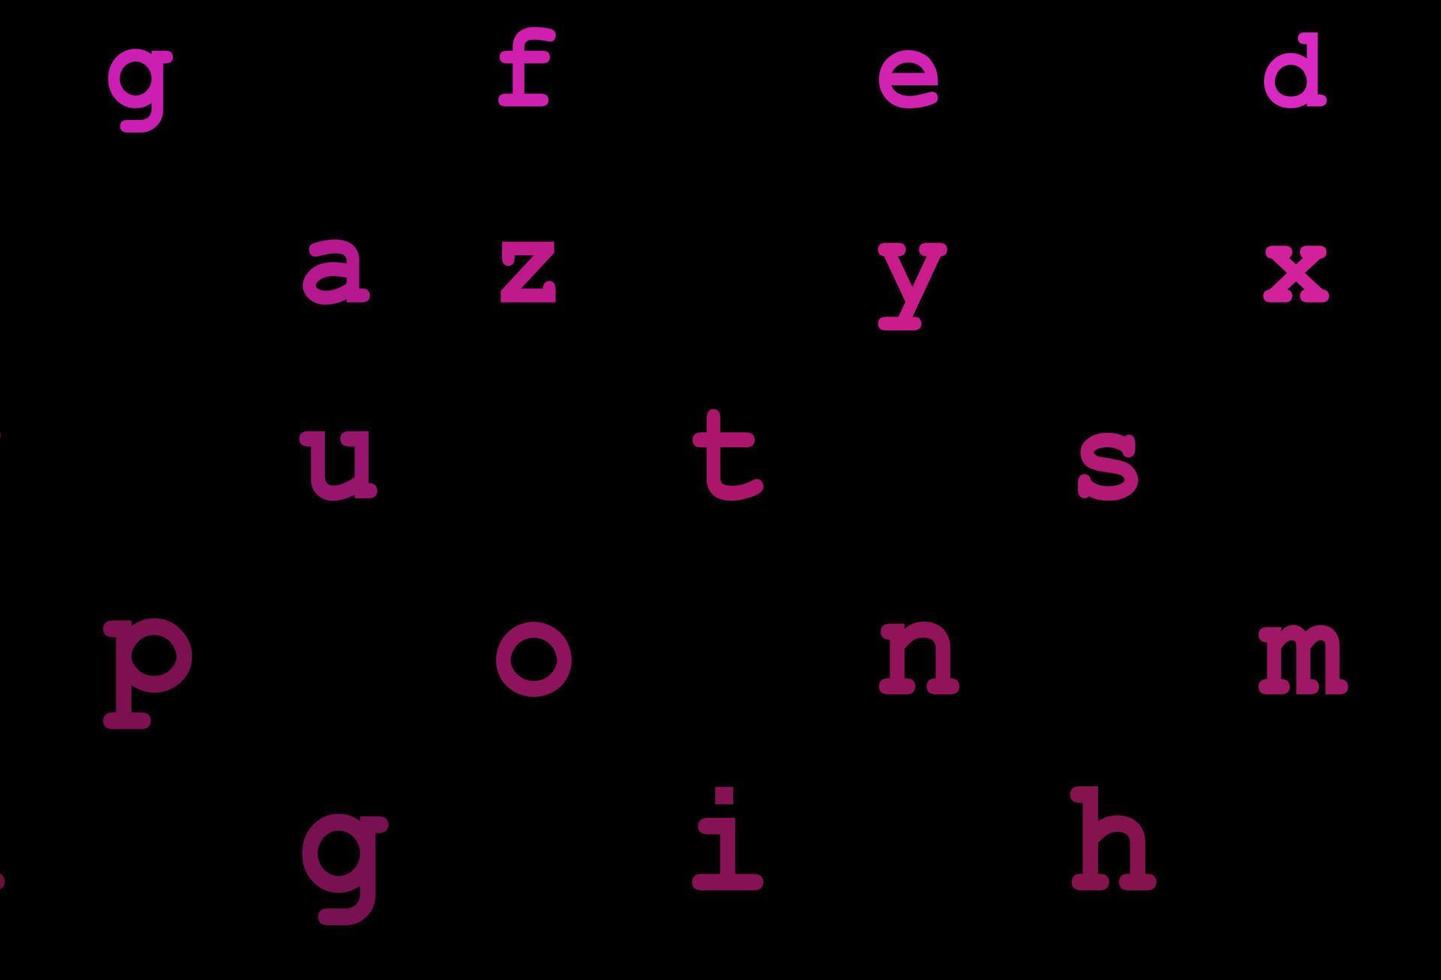 diseño vectorial de color rosa oscuro con alfabeto latino. vector